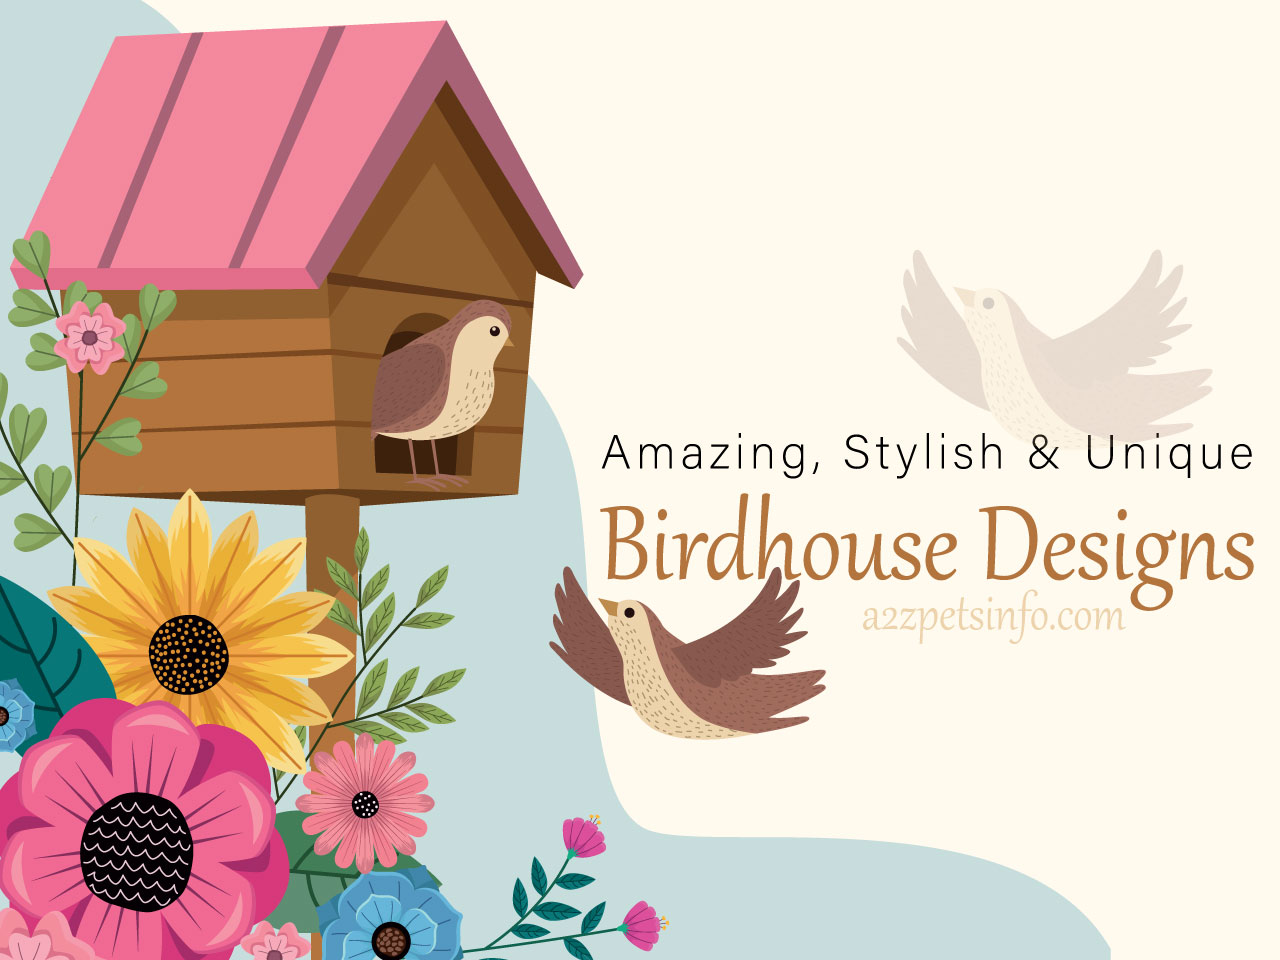 Birdhouse Designs